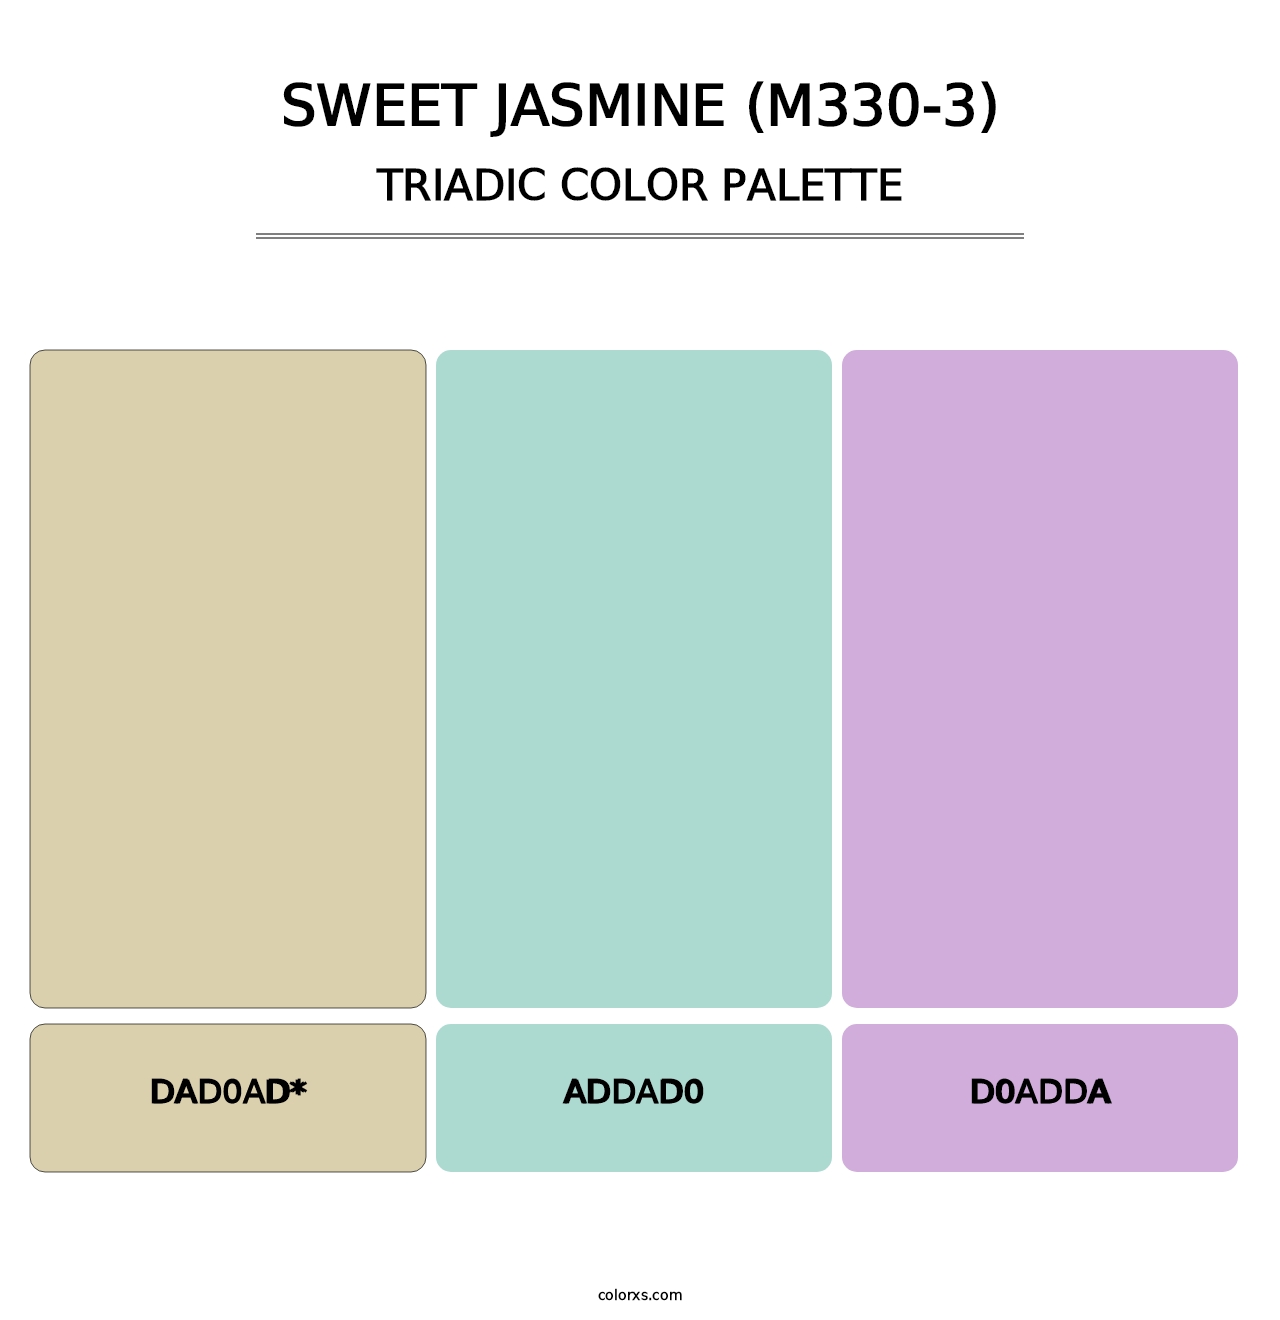 Sweet Jasmine (M330-3) - Triadic Color Palette